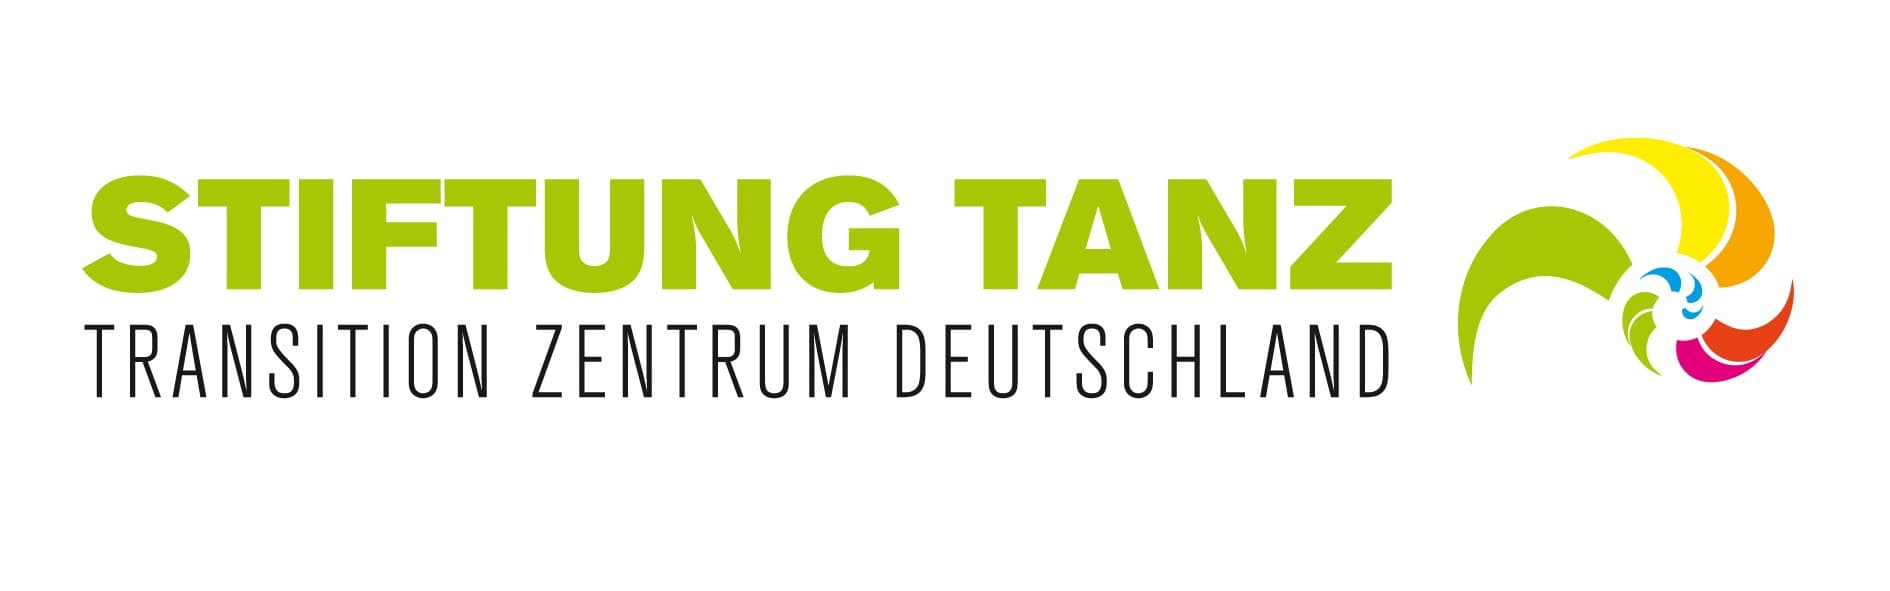 Stiftung Tanz logo